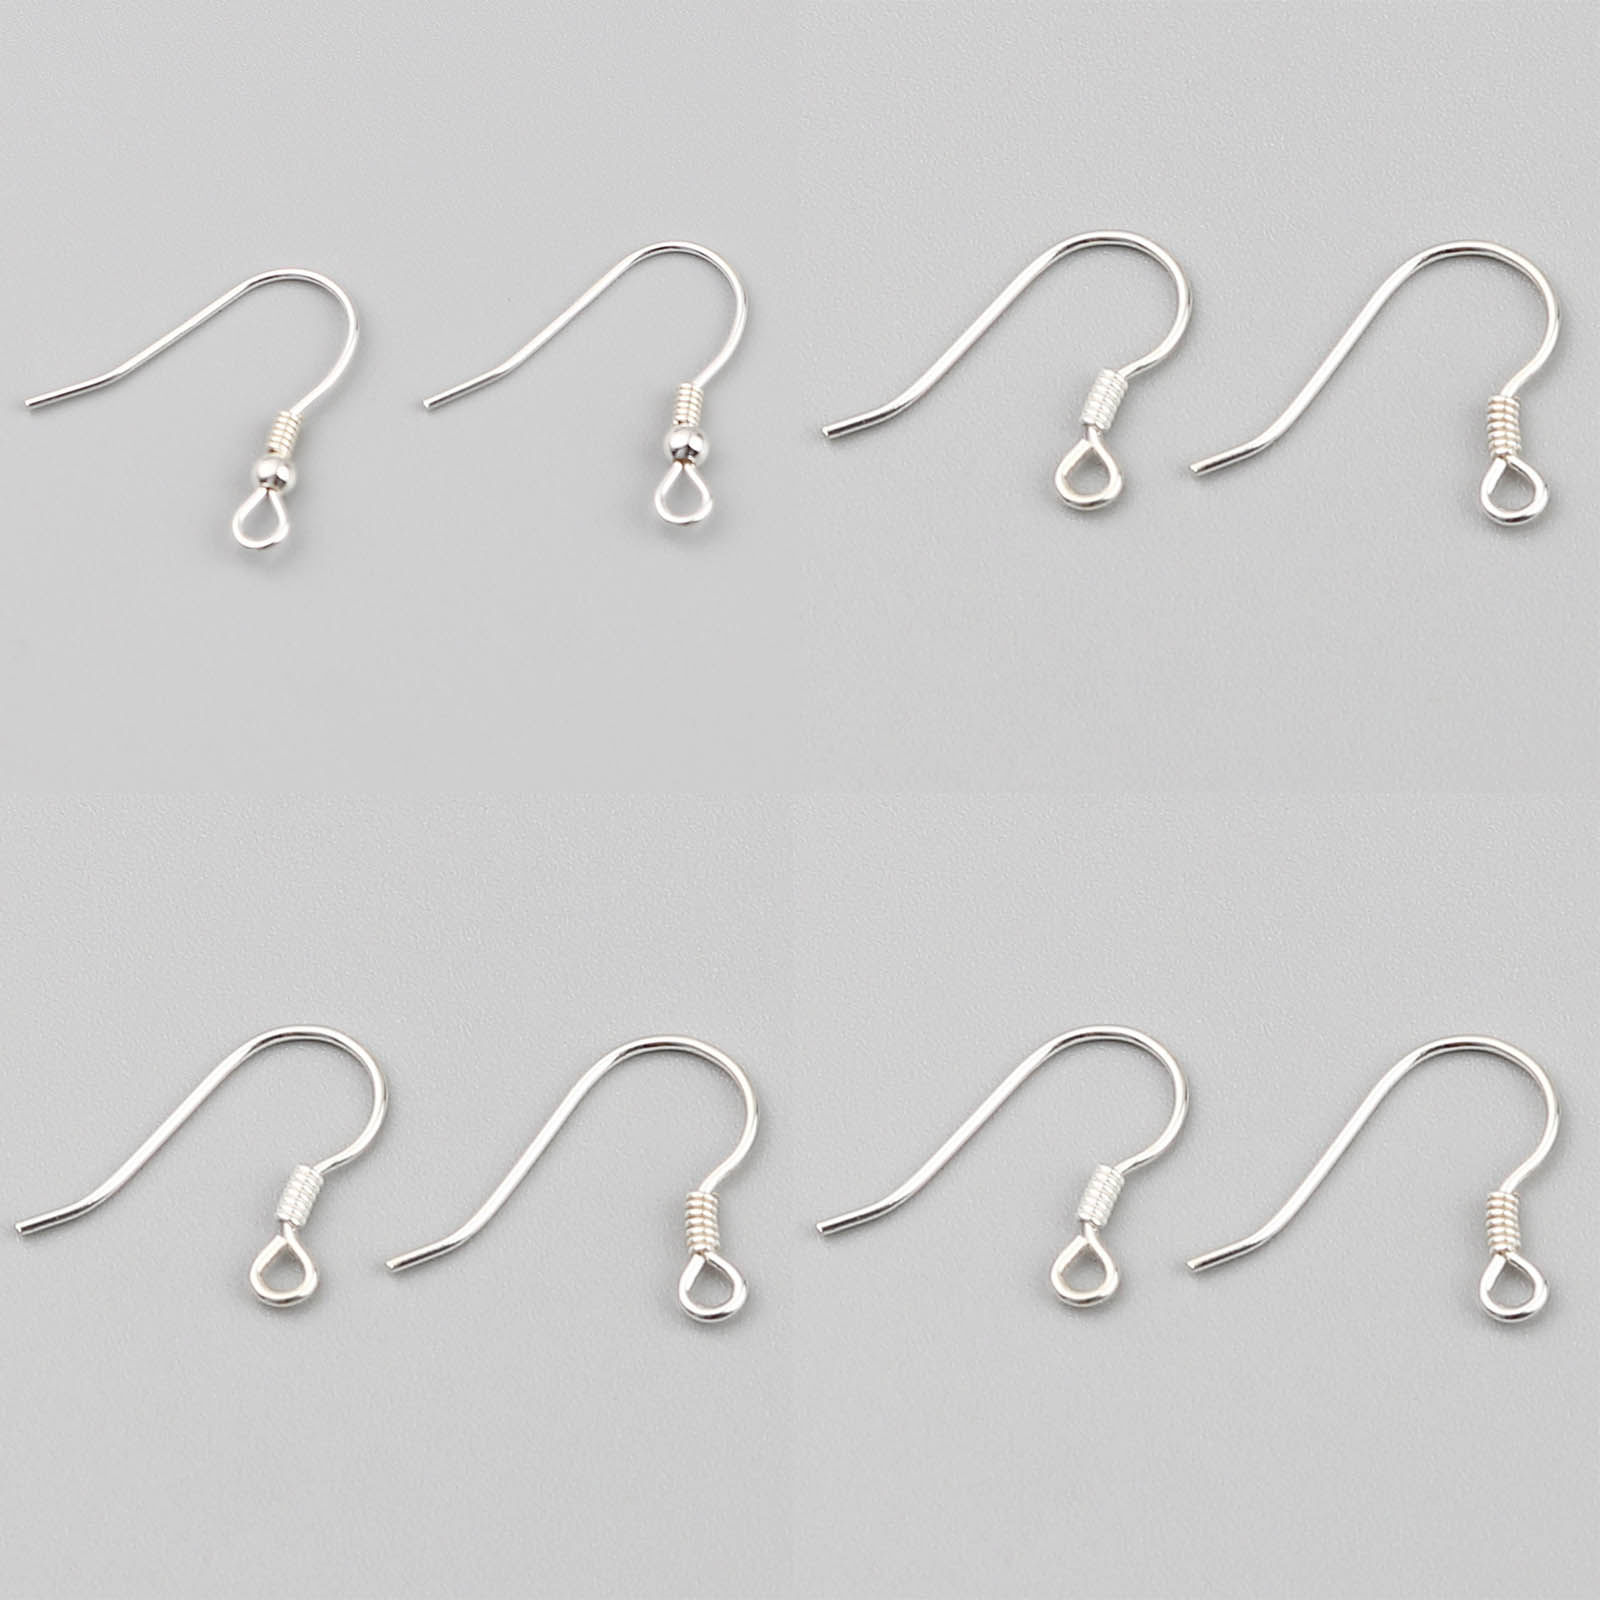 Picture of Sterling Silver Ear Wire Hooks Earring Findings Silver Color W/ Loop